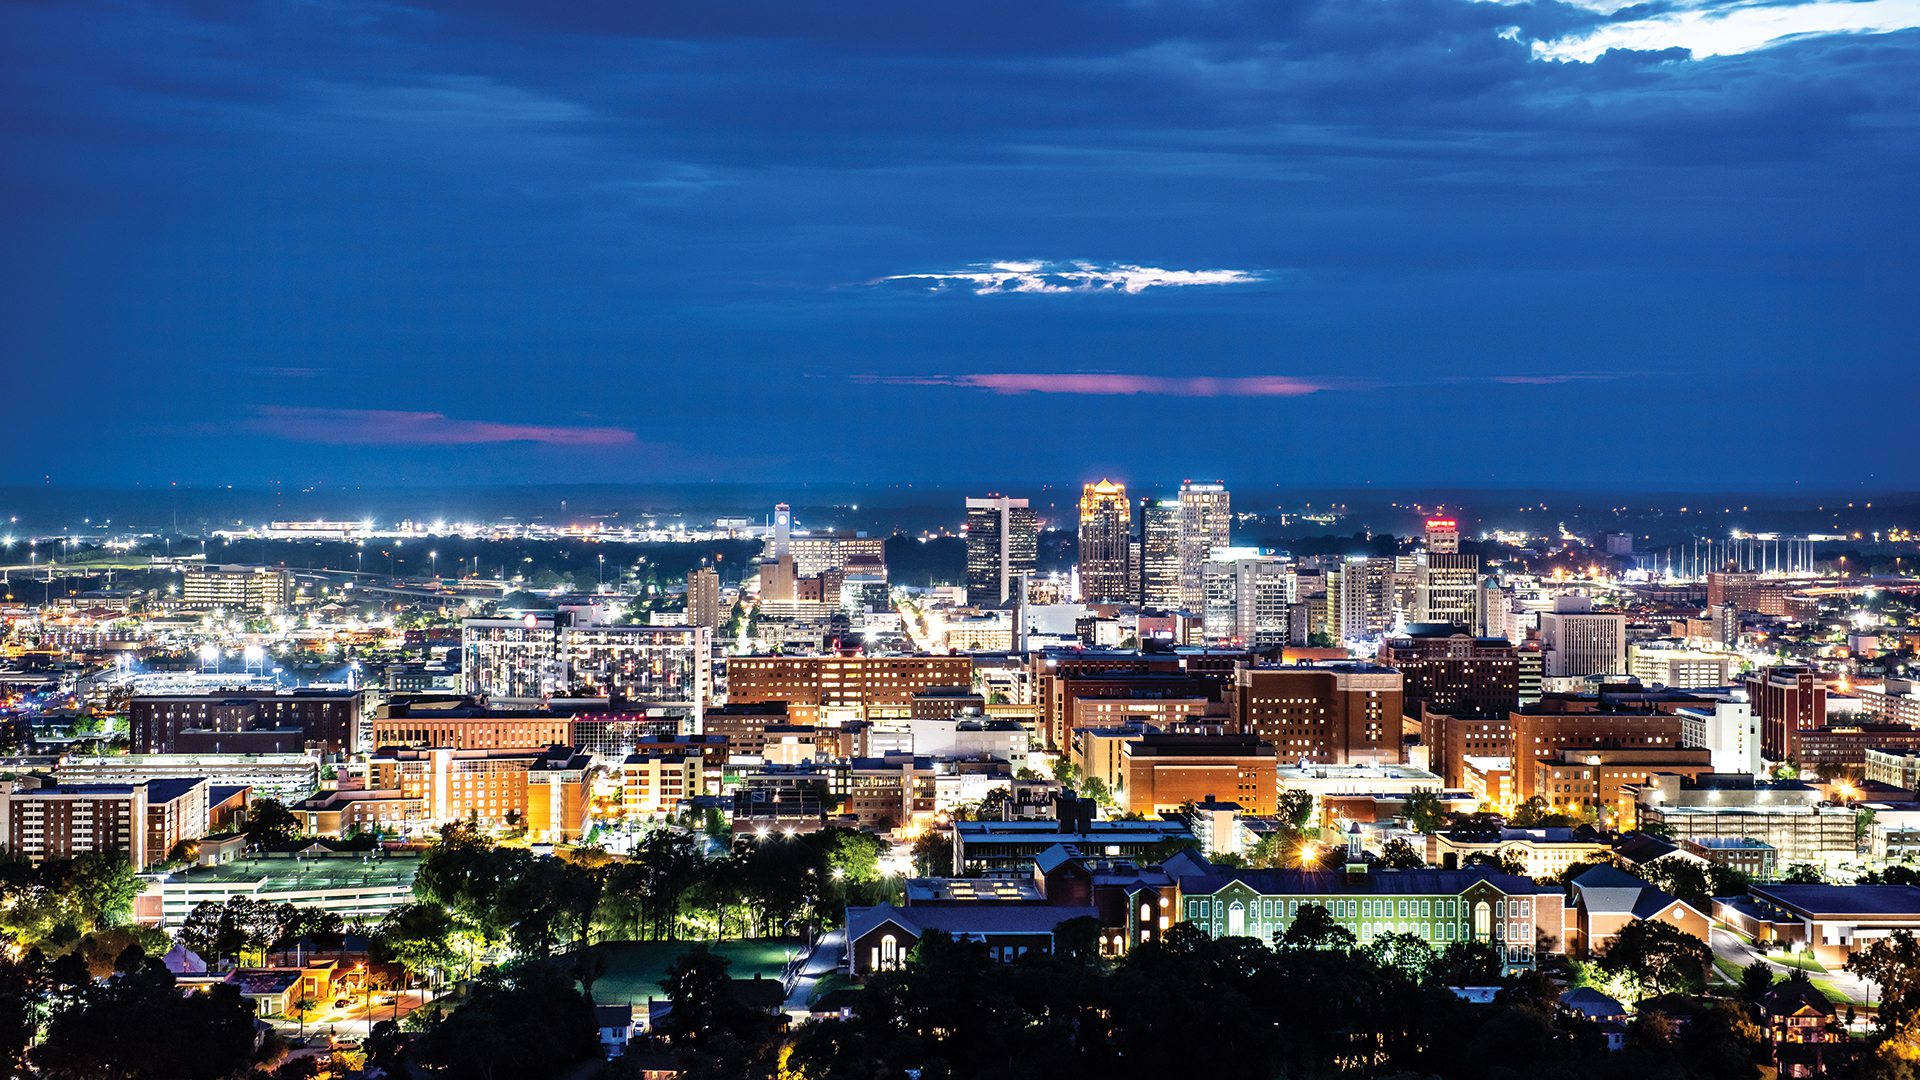 Birmingham skyline at night.